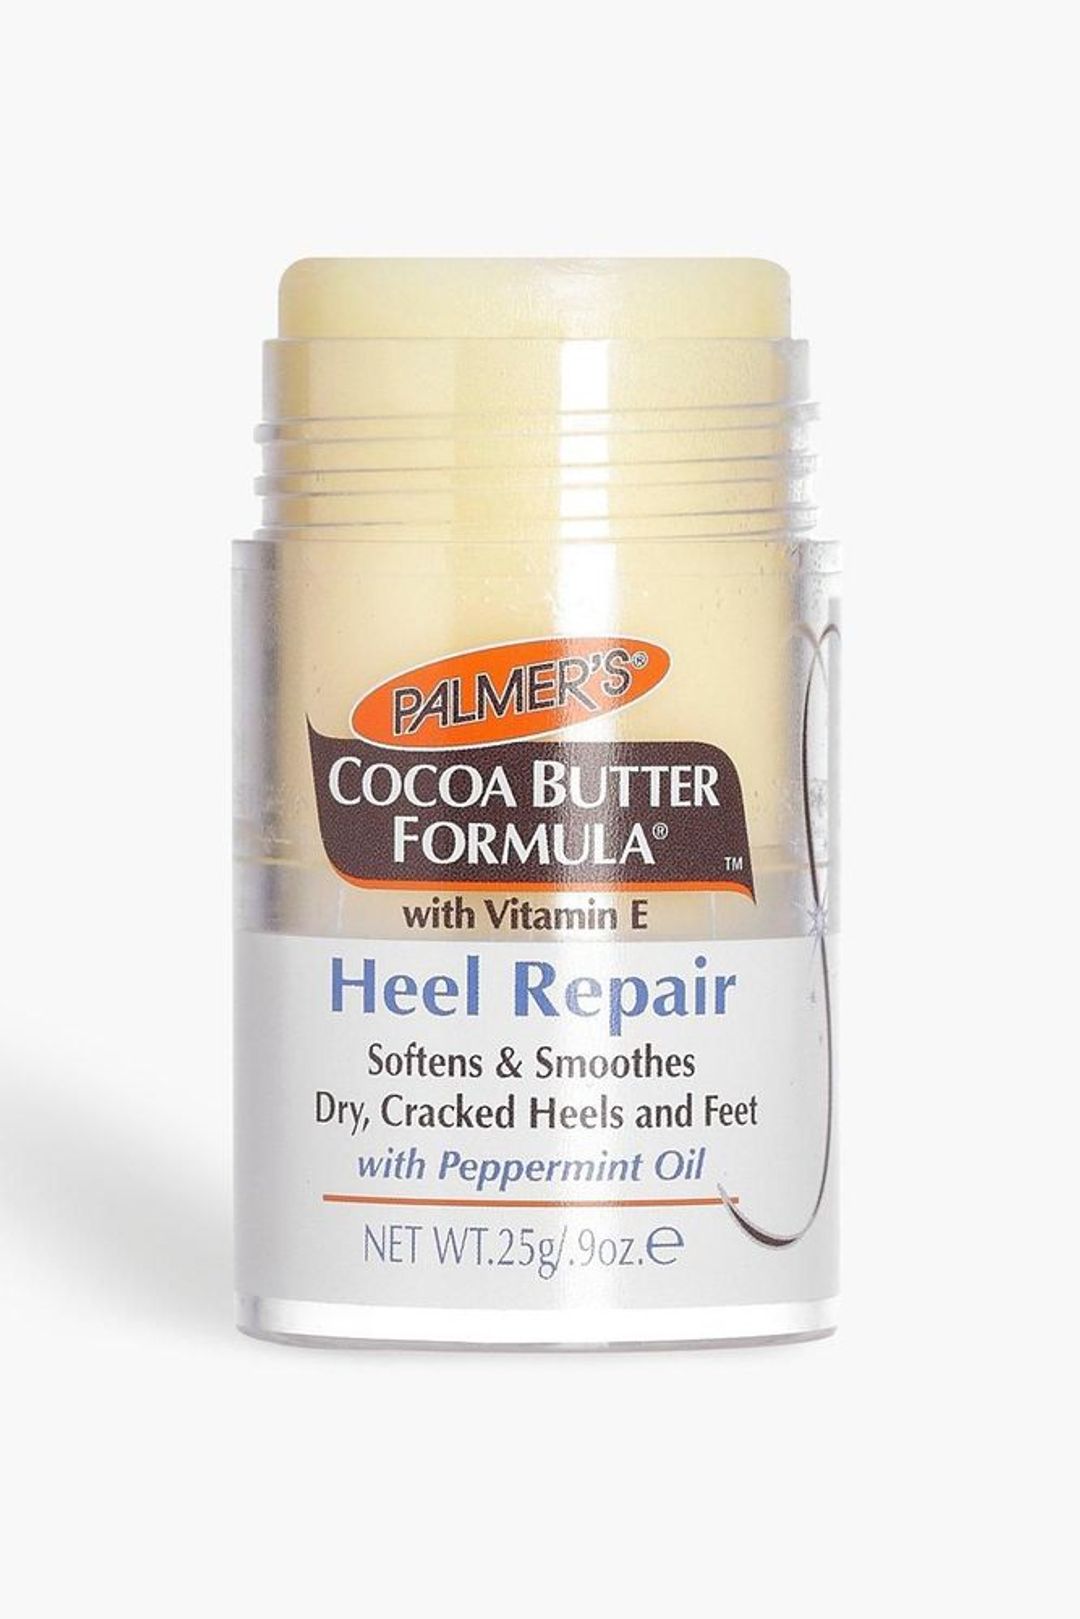 Palmer's Cocoa Butter Heel Repair - 25g